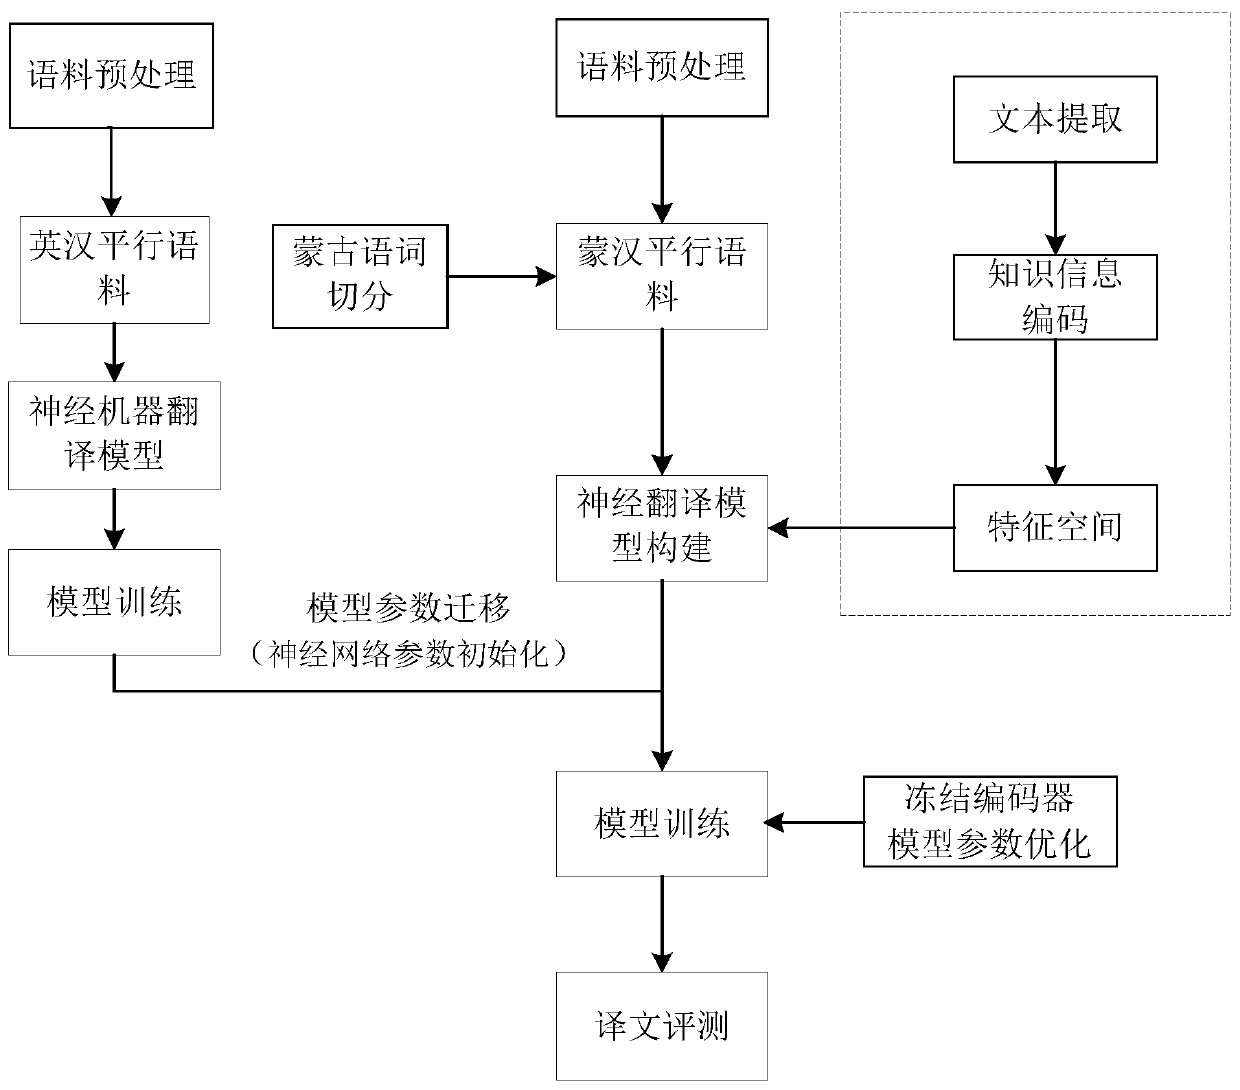 Mongolian-Chinese translation method based on transfer learning